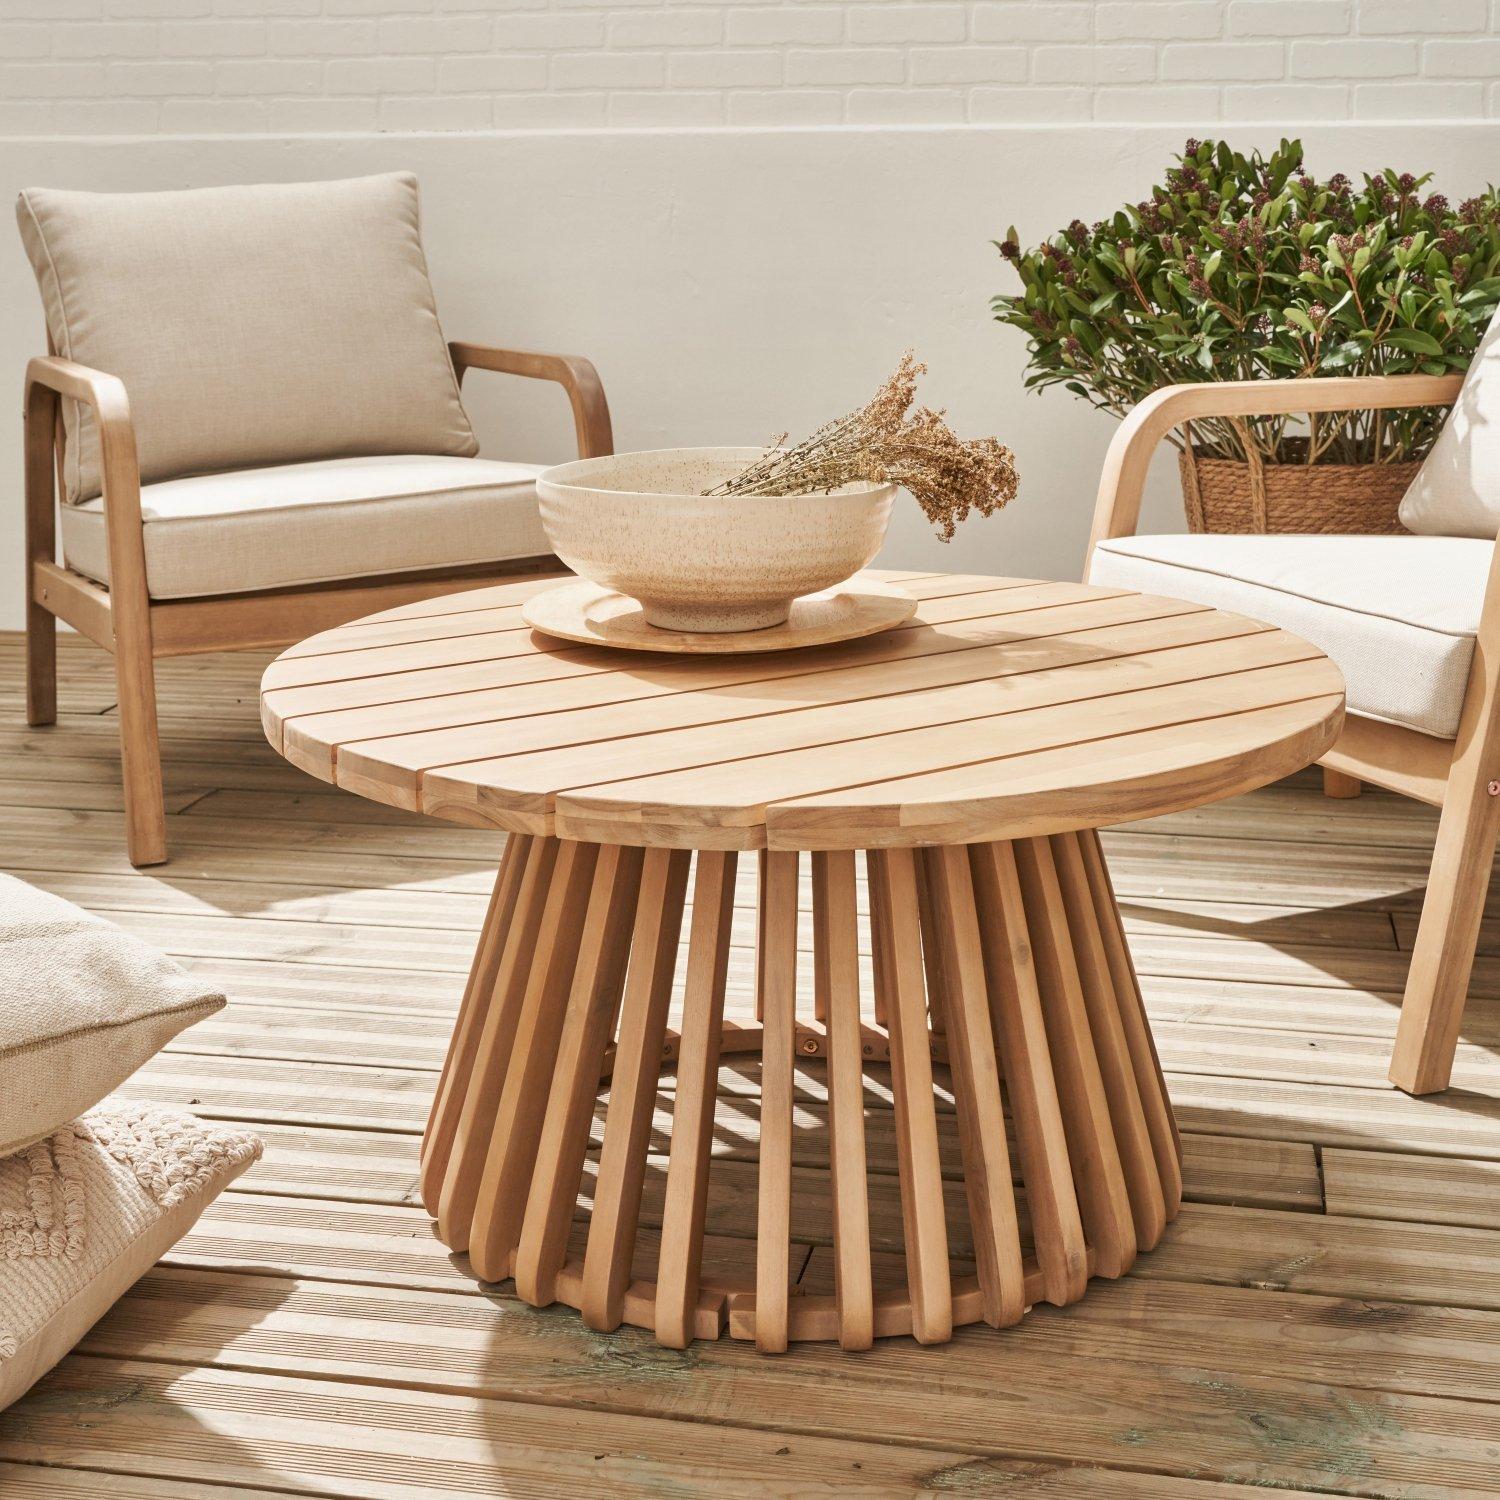 O80cm Wooden Coffee Table Indoor/outdoor